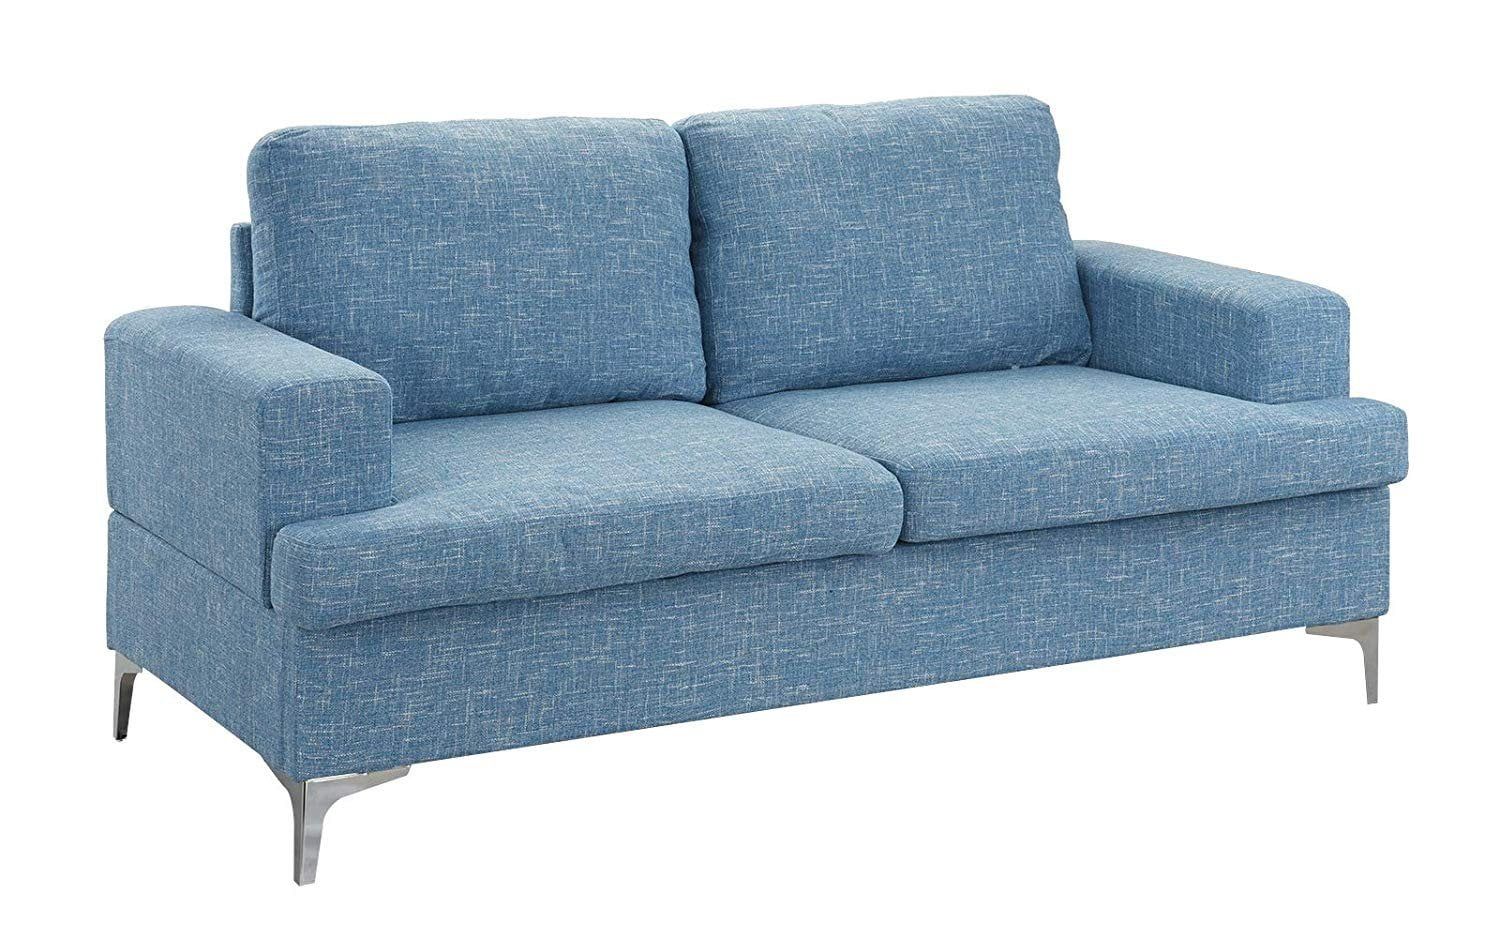 Mobilis Mid Century Modern Linen Fabric Loveseat Sofa, Light Blue Inside Modern Blue Linen Sofas (Gallery 3 of 20)